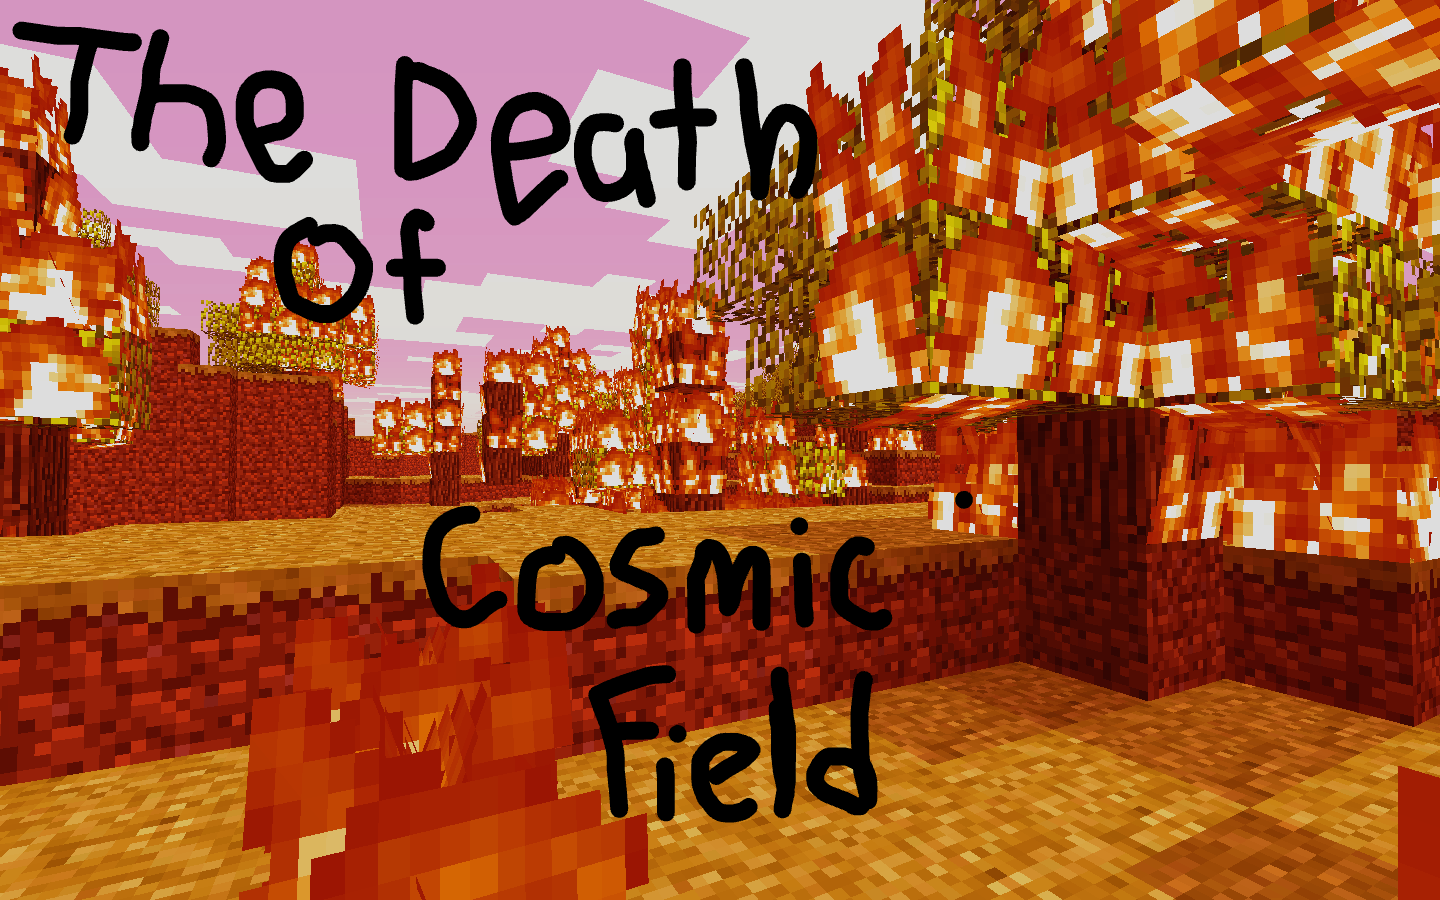 The Death of Cosmic Field